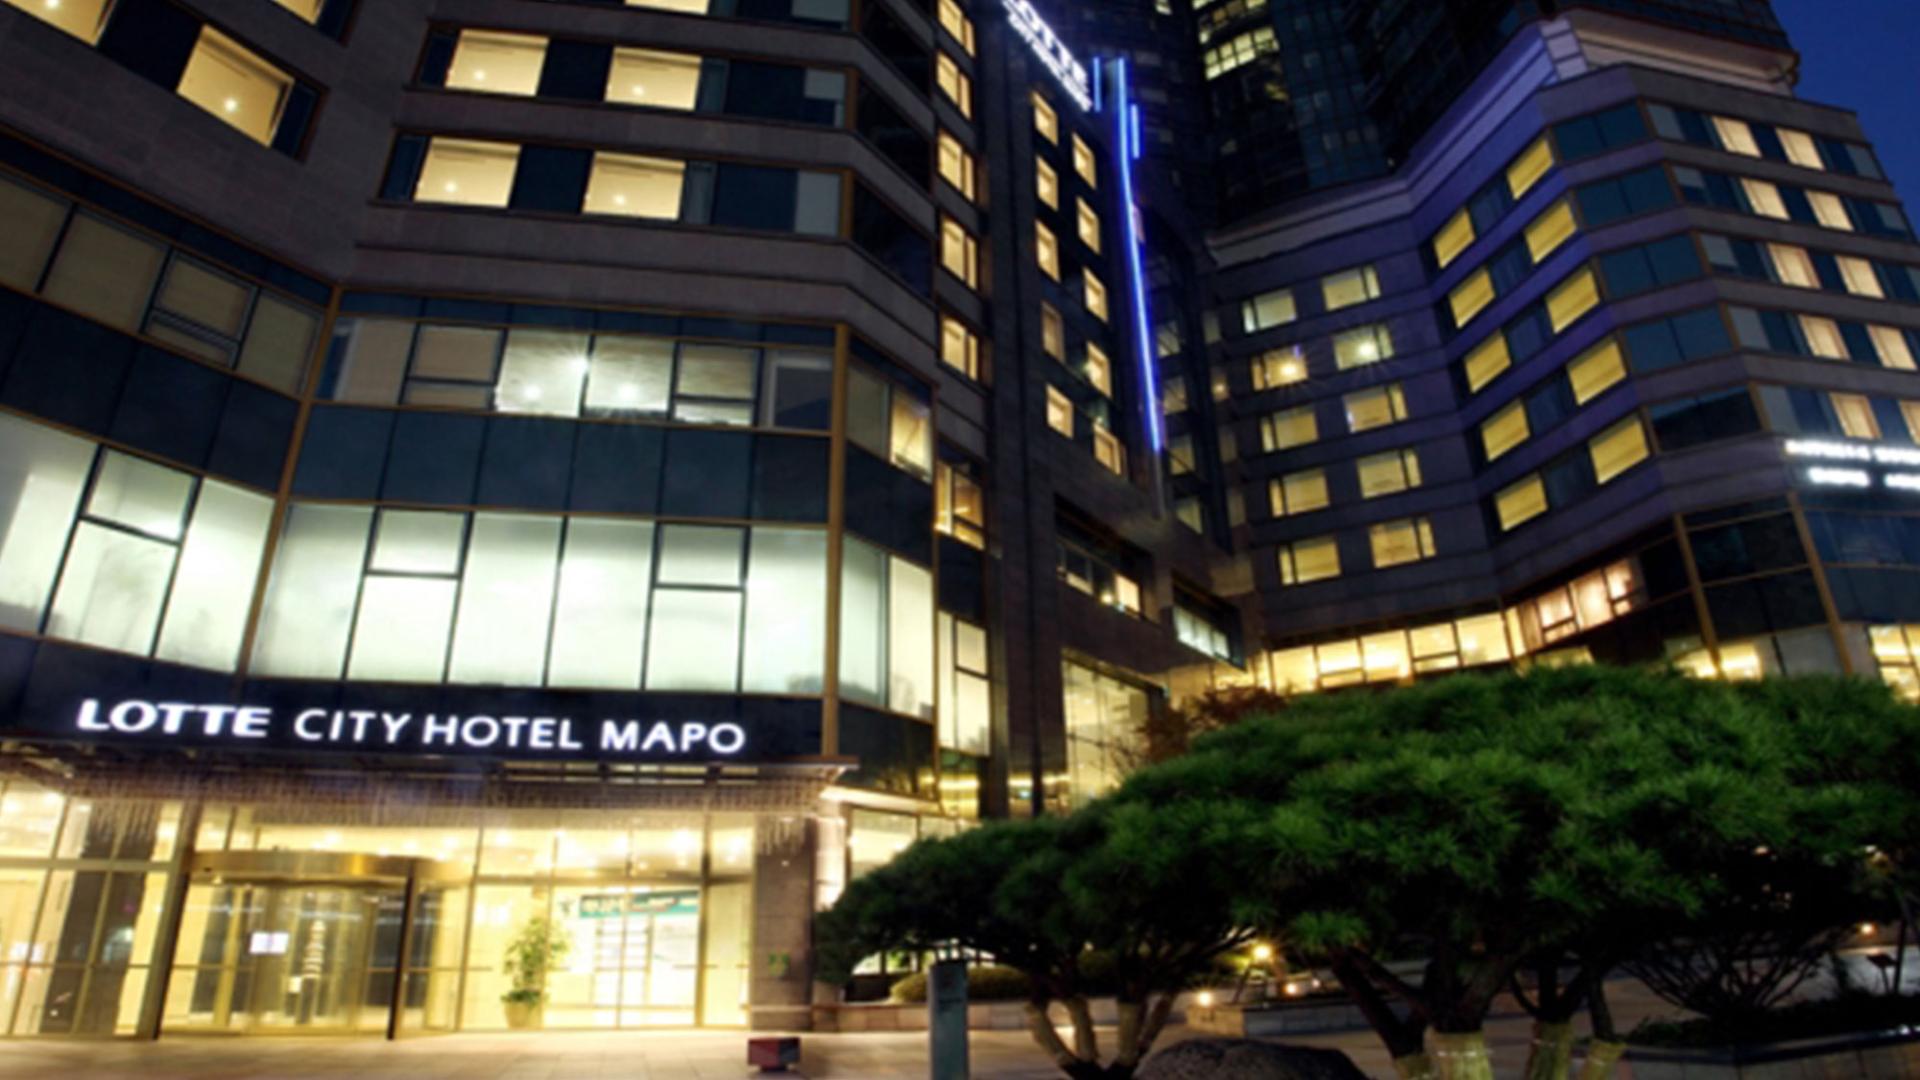 Lotte City Hotel Mapo Panoramic night photo